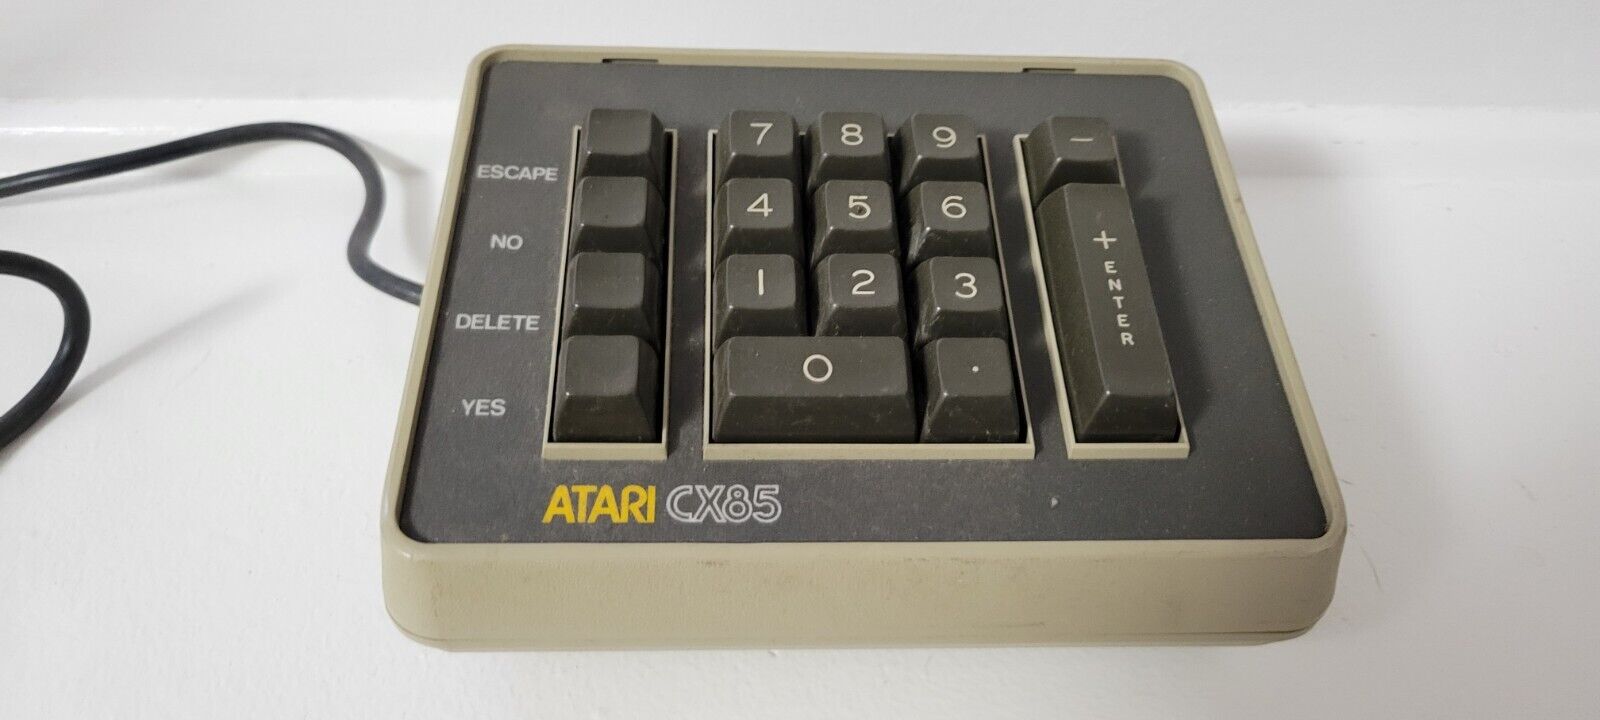 Atari CX85 Numeric Keypad for ATARI Computer Systems 400/800/XL/XE 